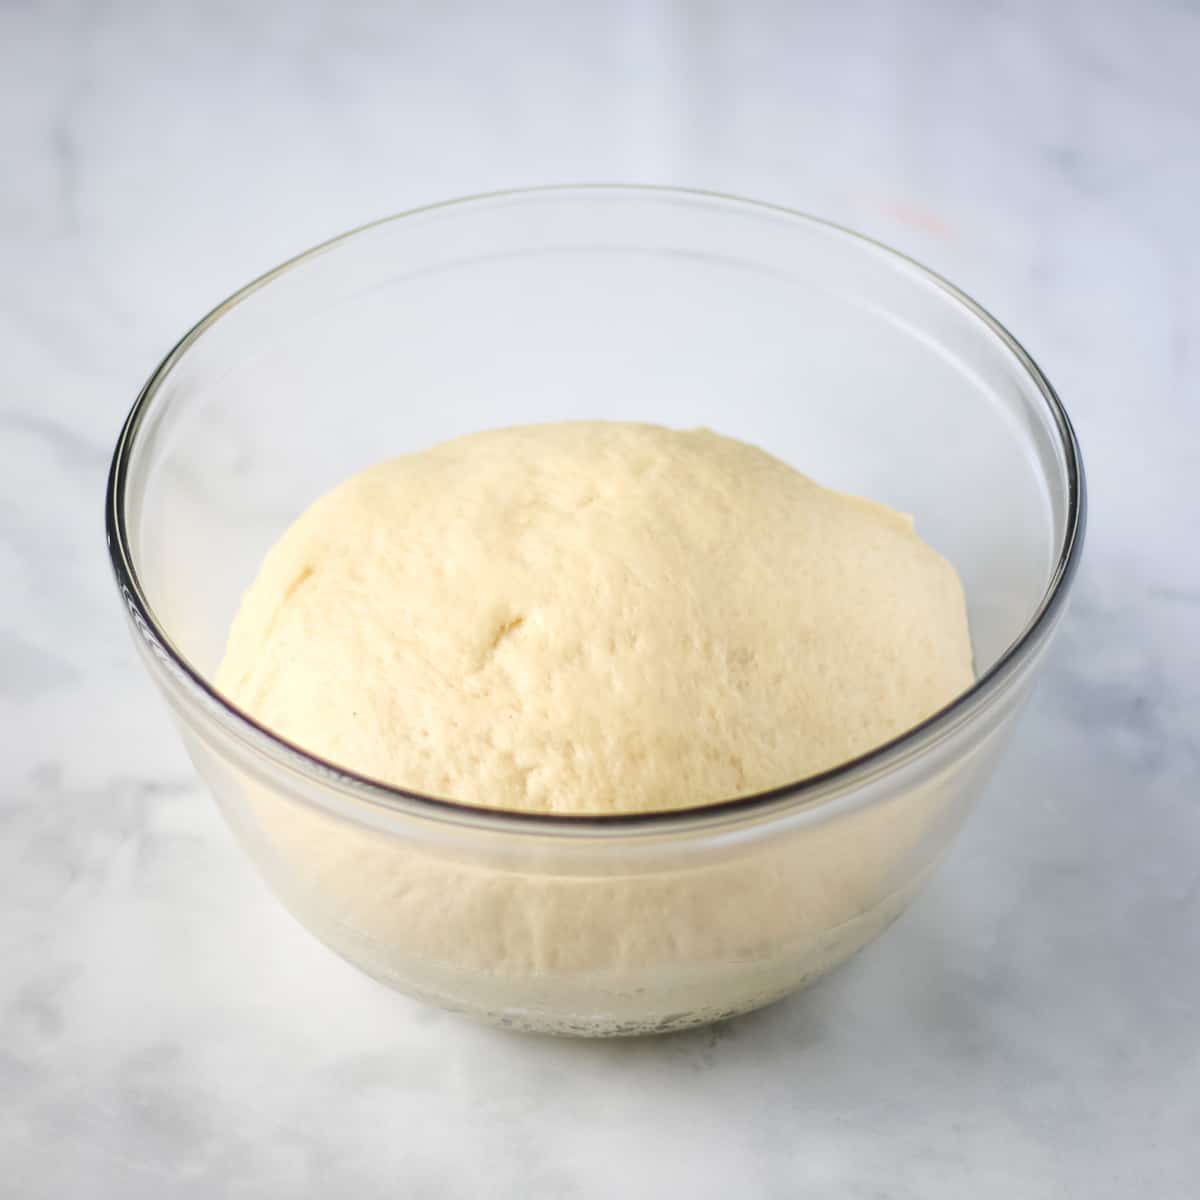 Risen dough in a clear glass bowl.